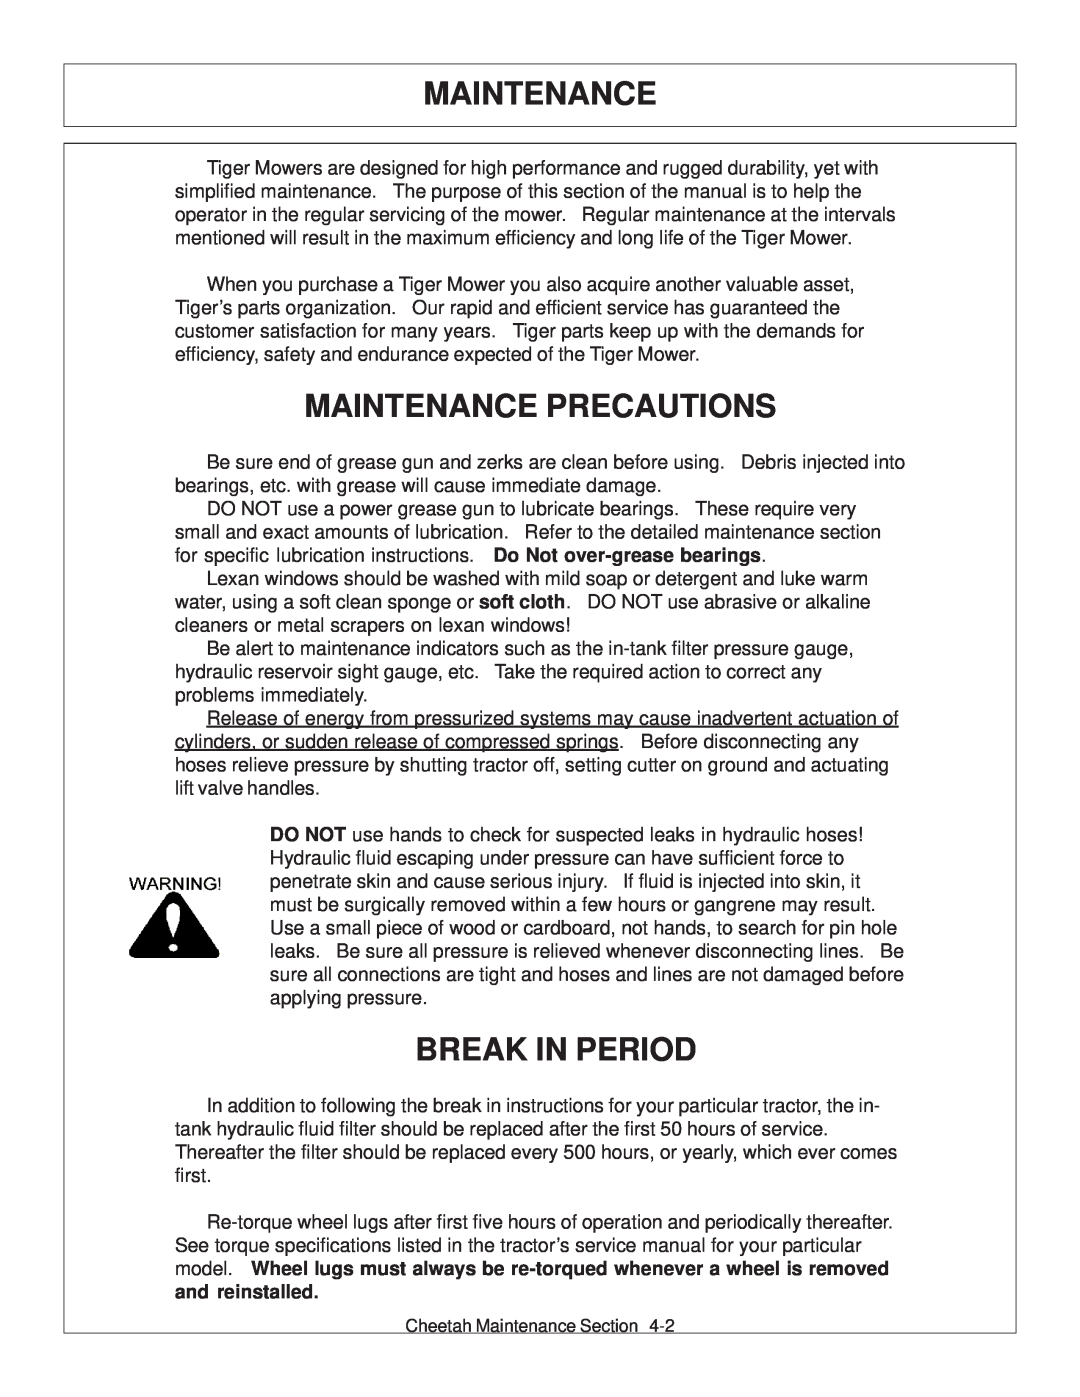 Tiger Products Co., Ltd JD 5093E, JD 5101E, JD 5083E manual Maintenance Precautions, Break In Period 